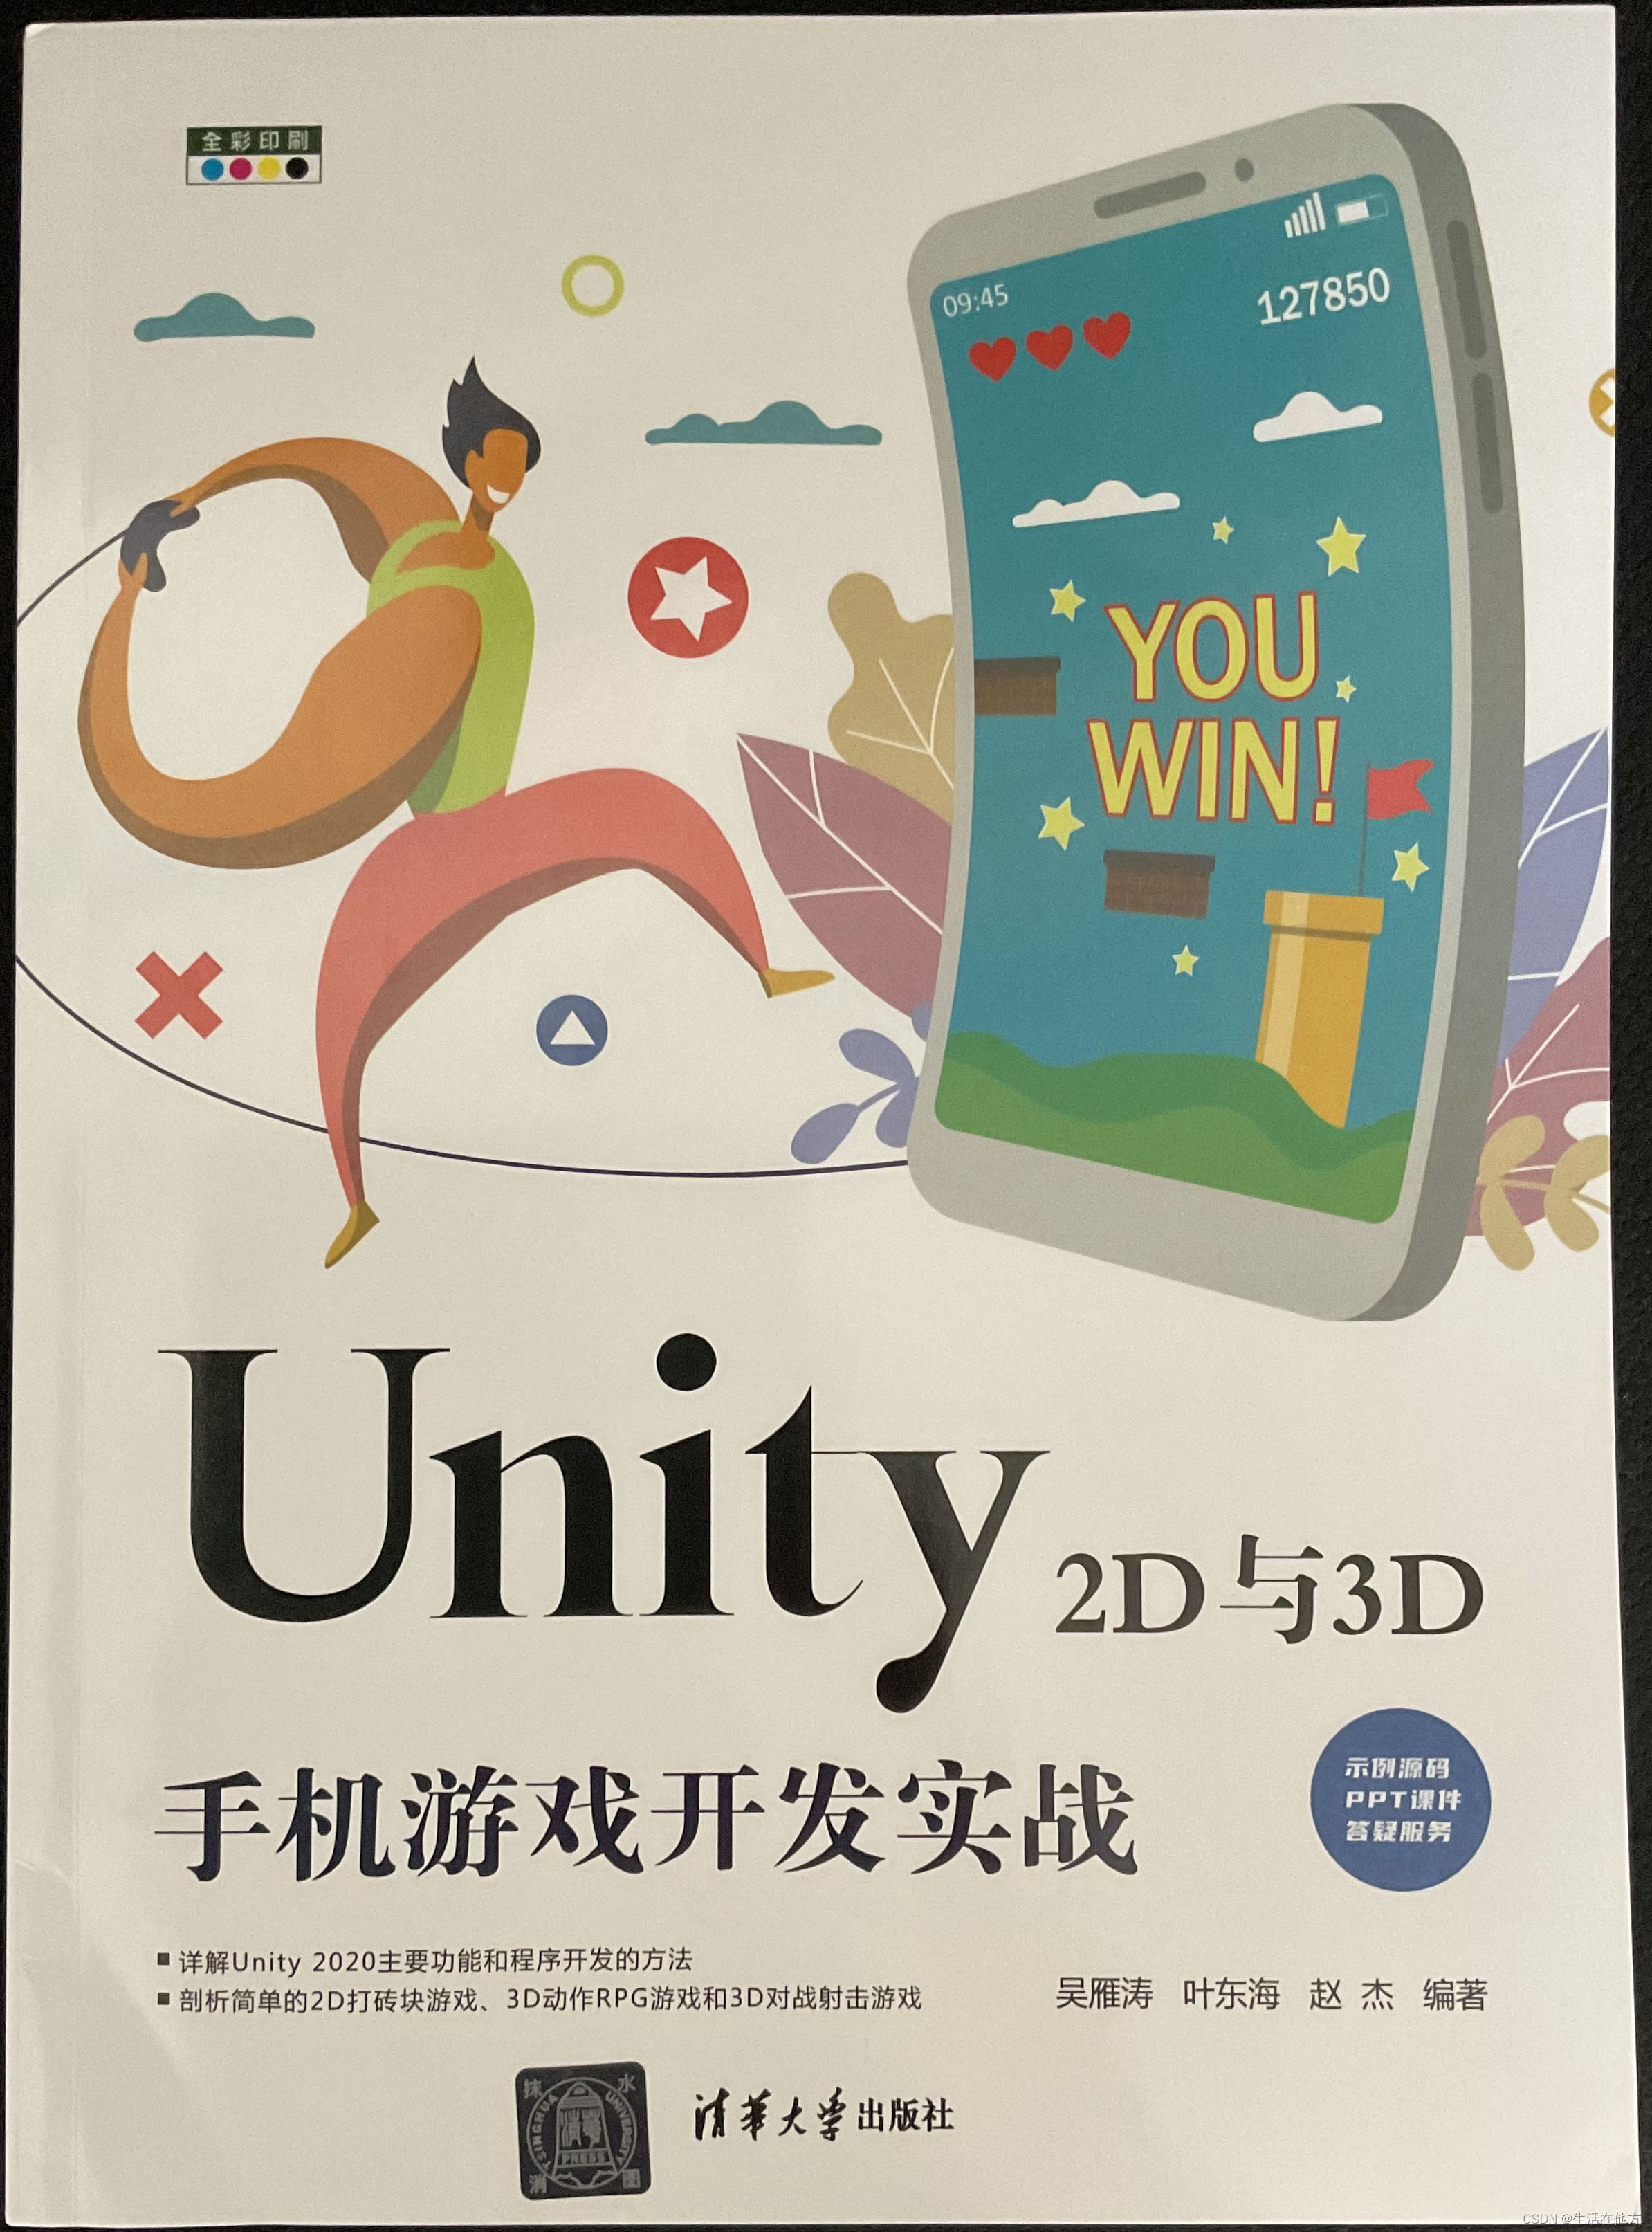 《Unity 2D与3D手机游戏开发实战》上架了。